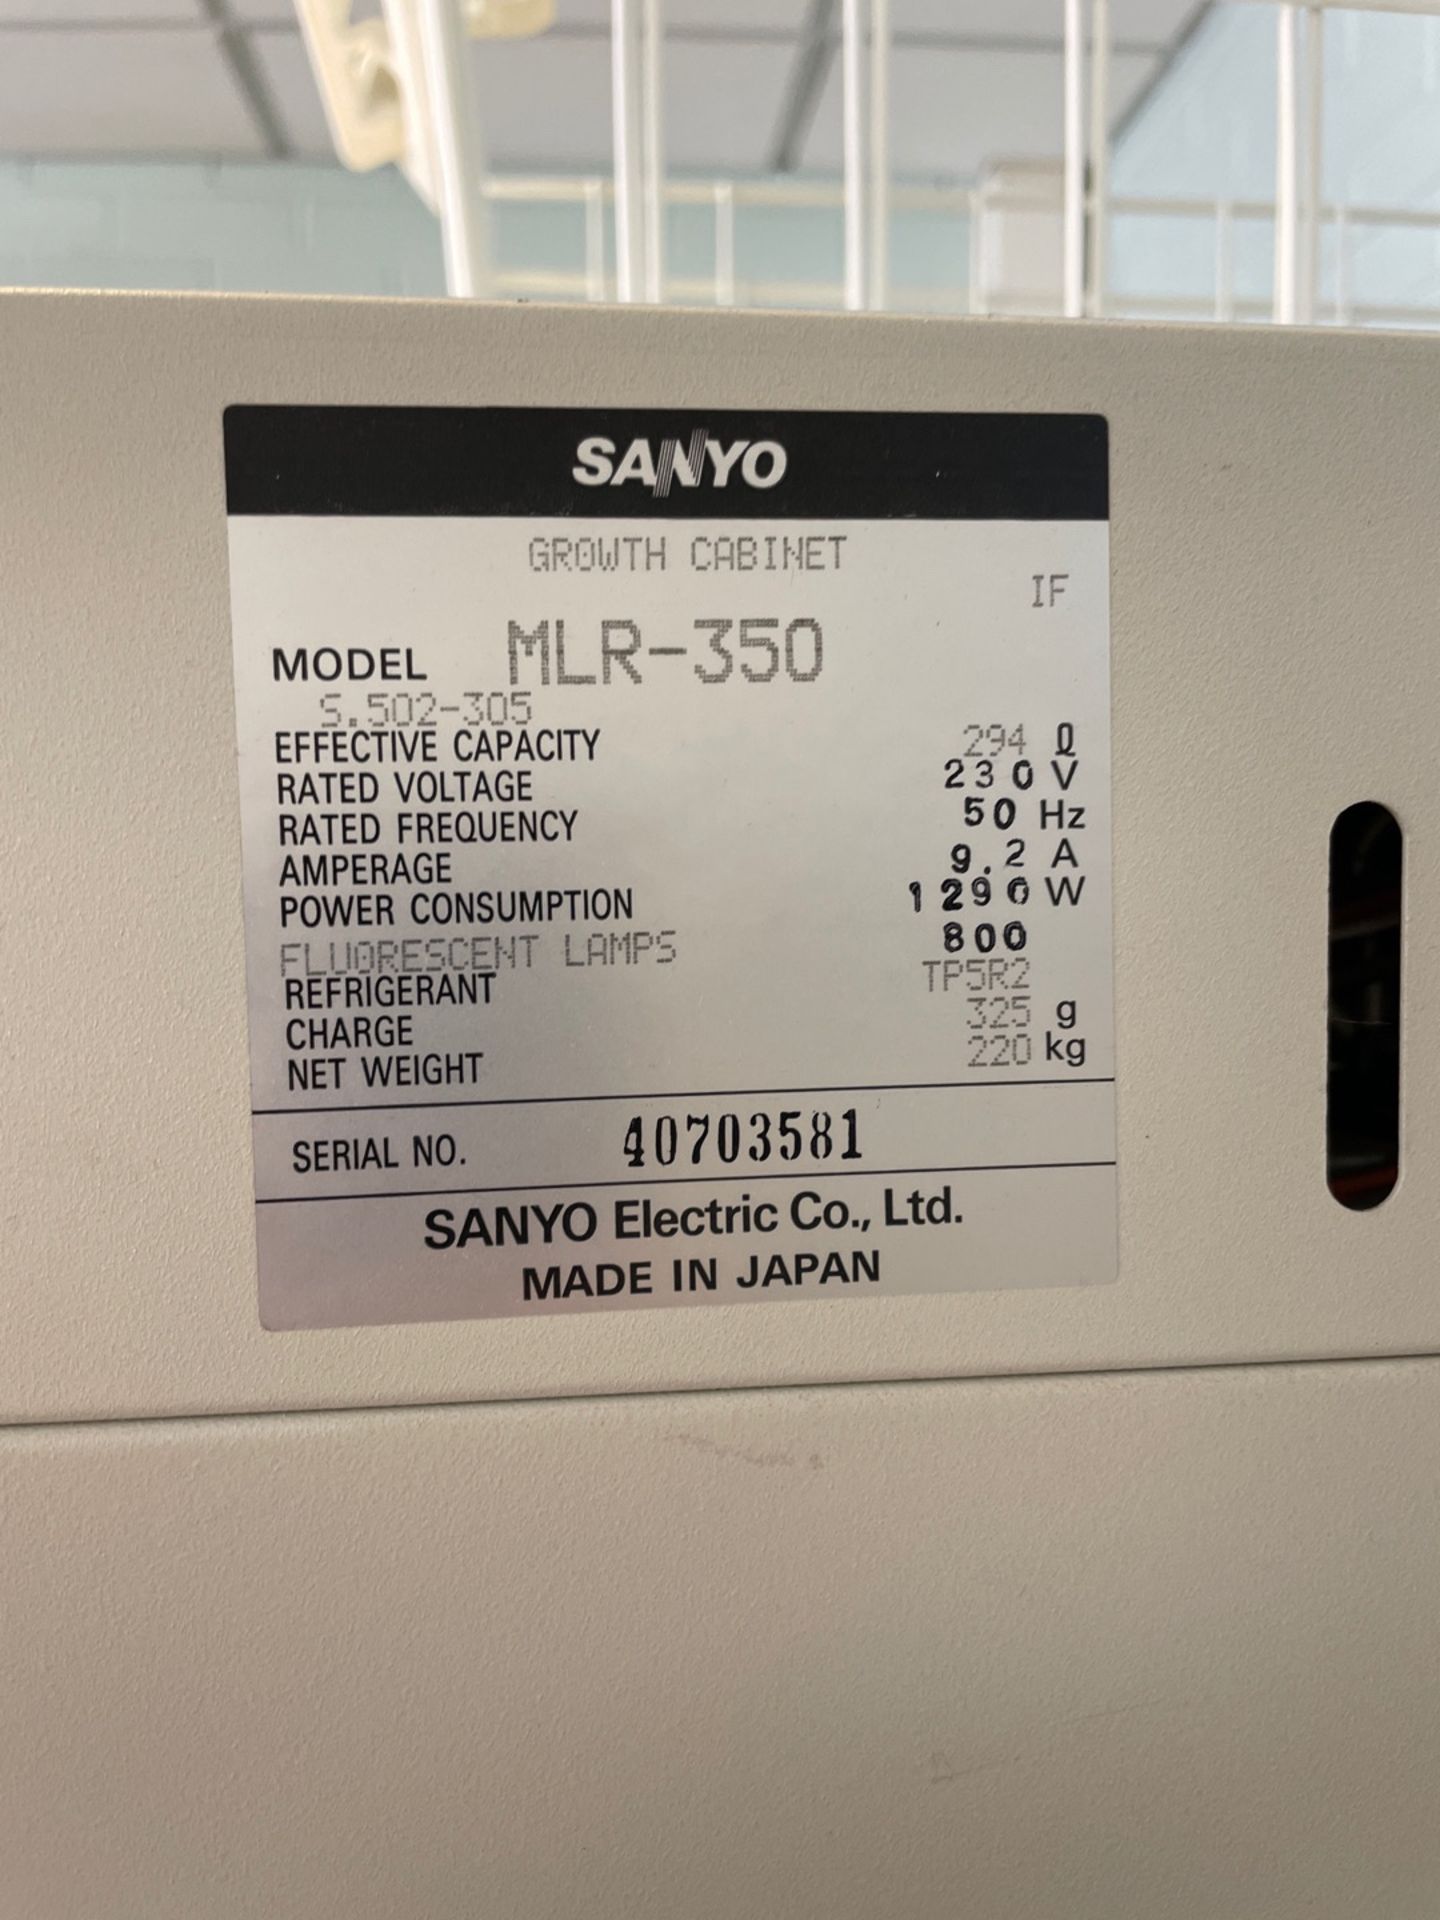 Sanyo MLR-350 Growth Cabinet - Image 4 of 4